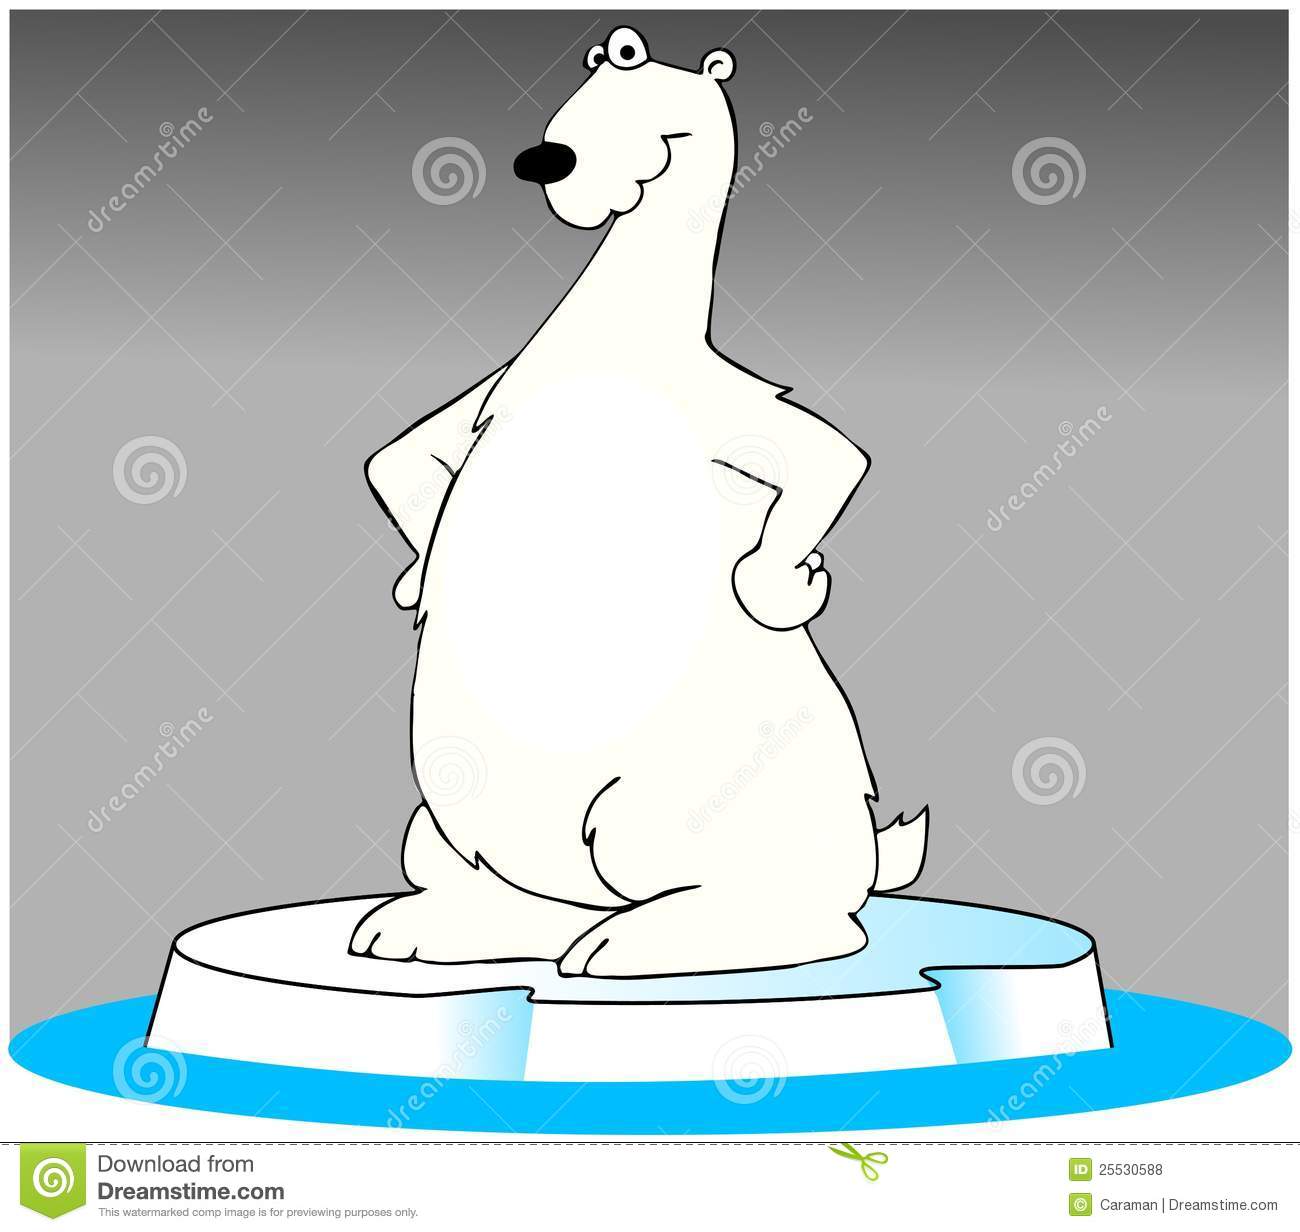 Polar Bear On An Iceberg Royalty Free Stock Photos   Image  25530588